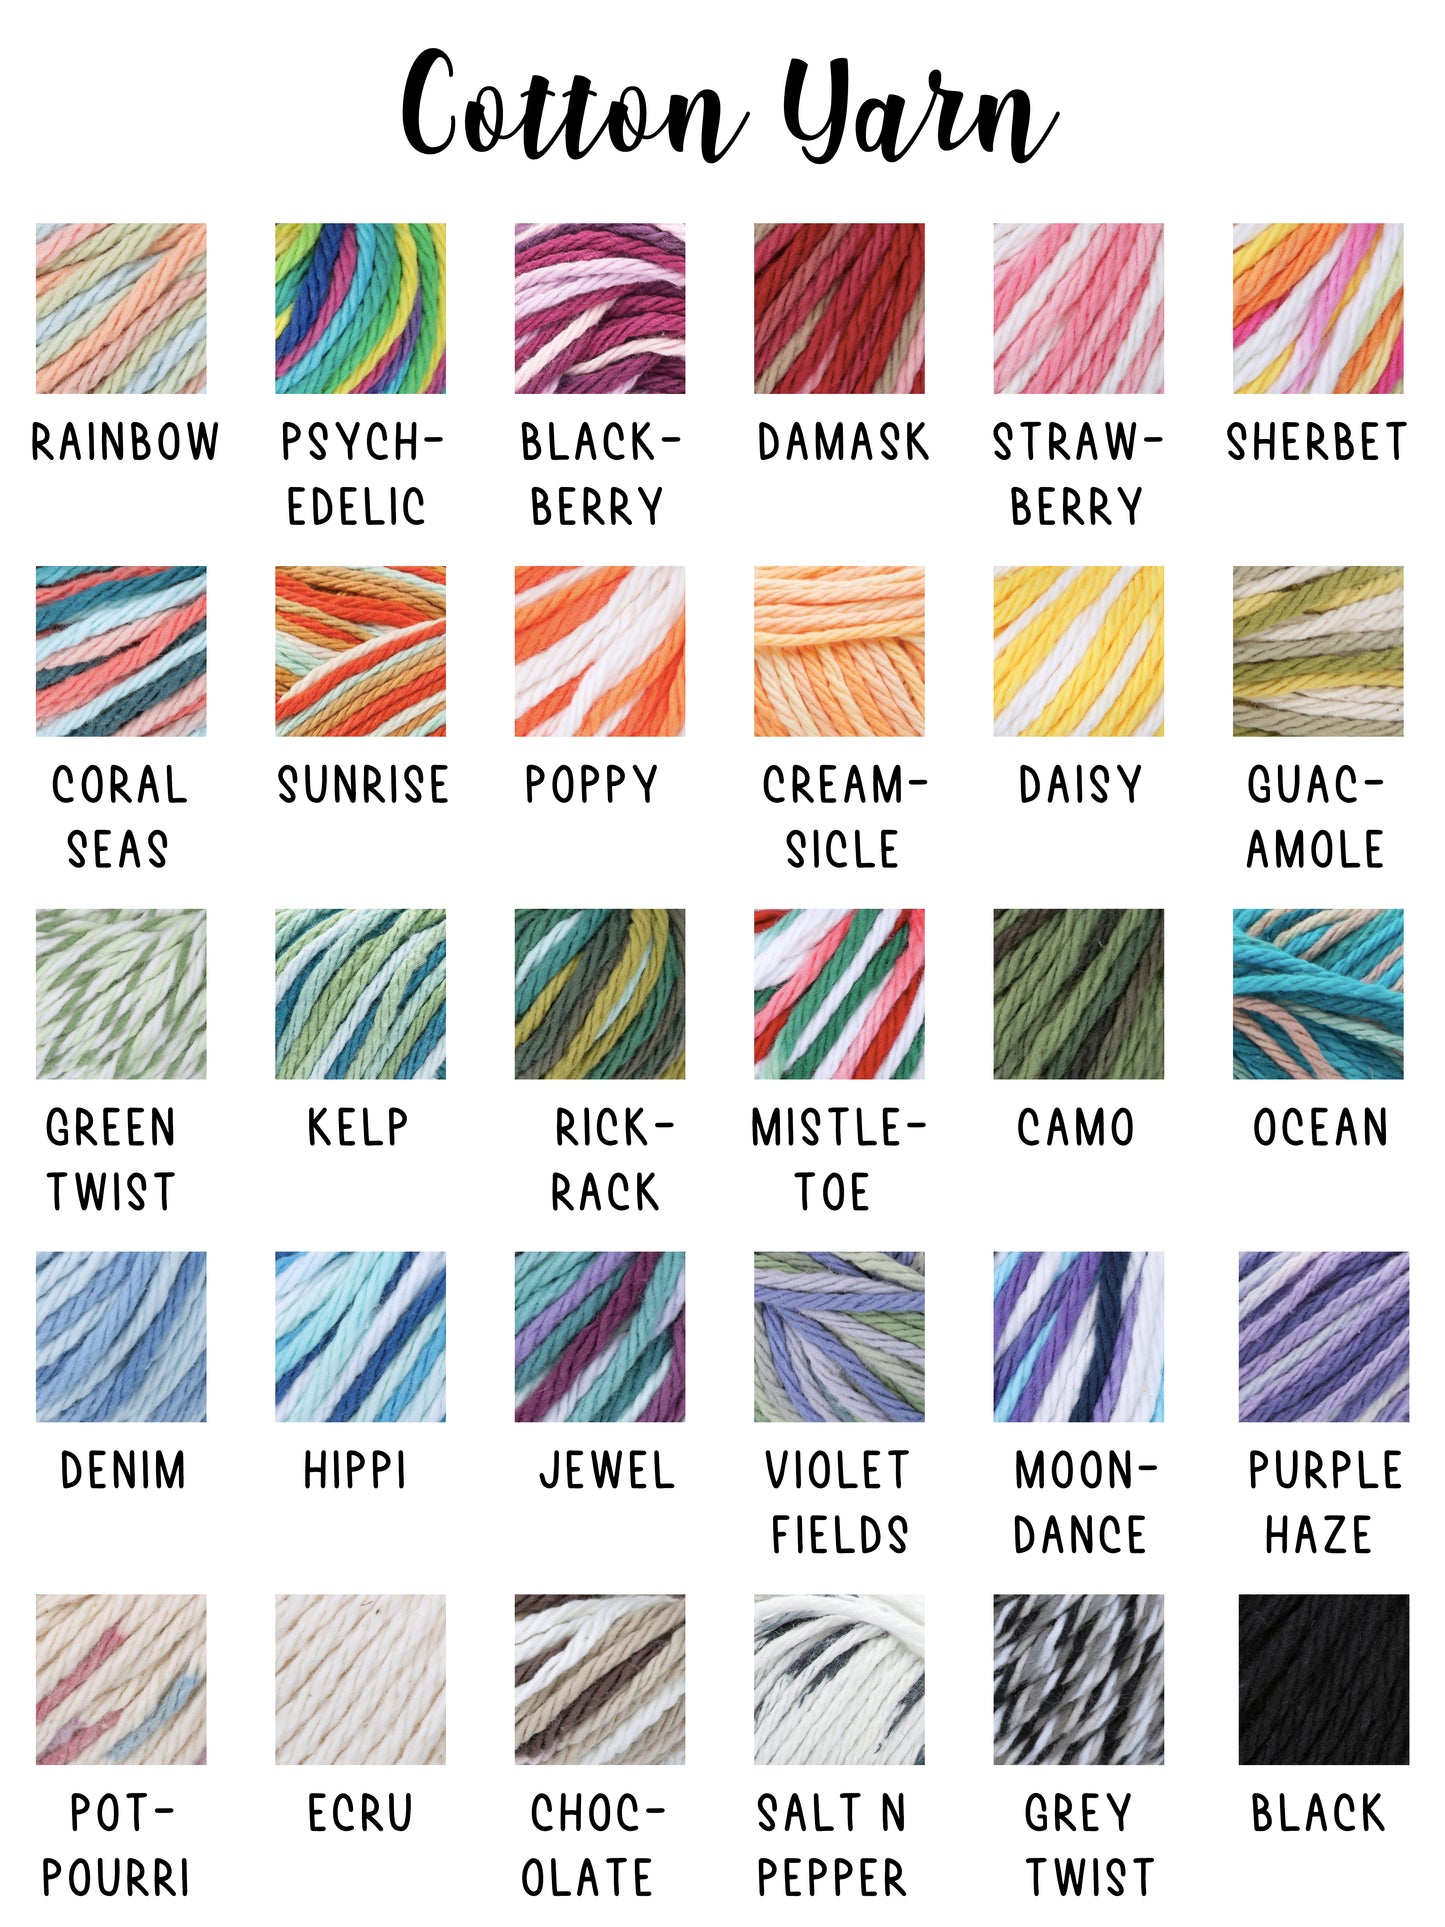 Lip Balm Holder Keychain | 30 colors! | Crochet Chapstick Holder